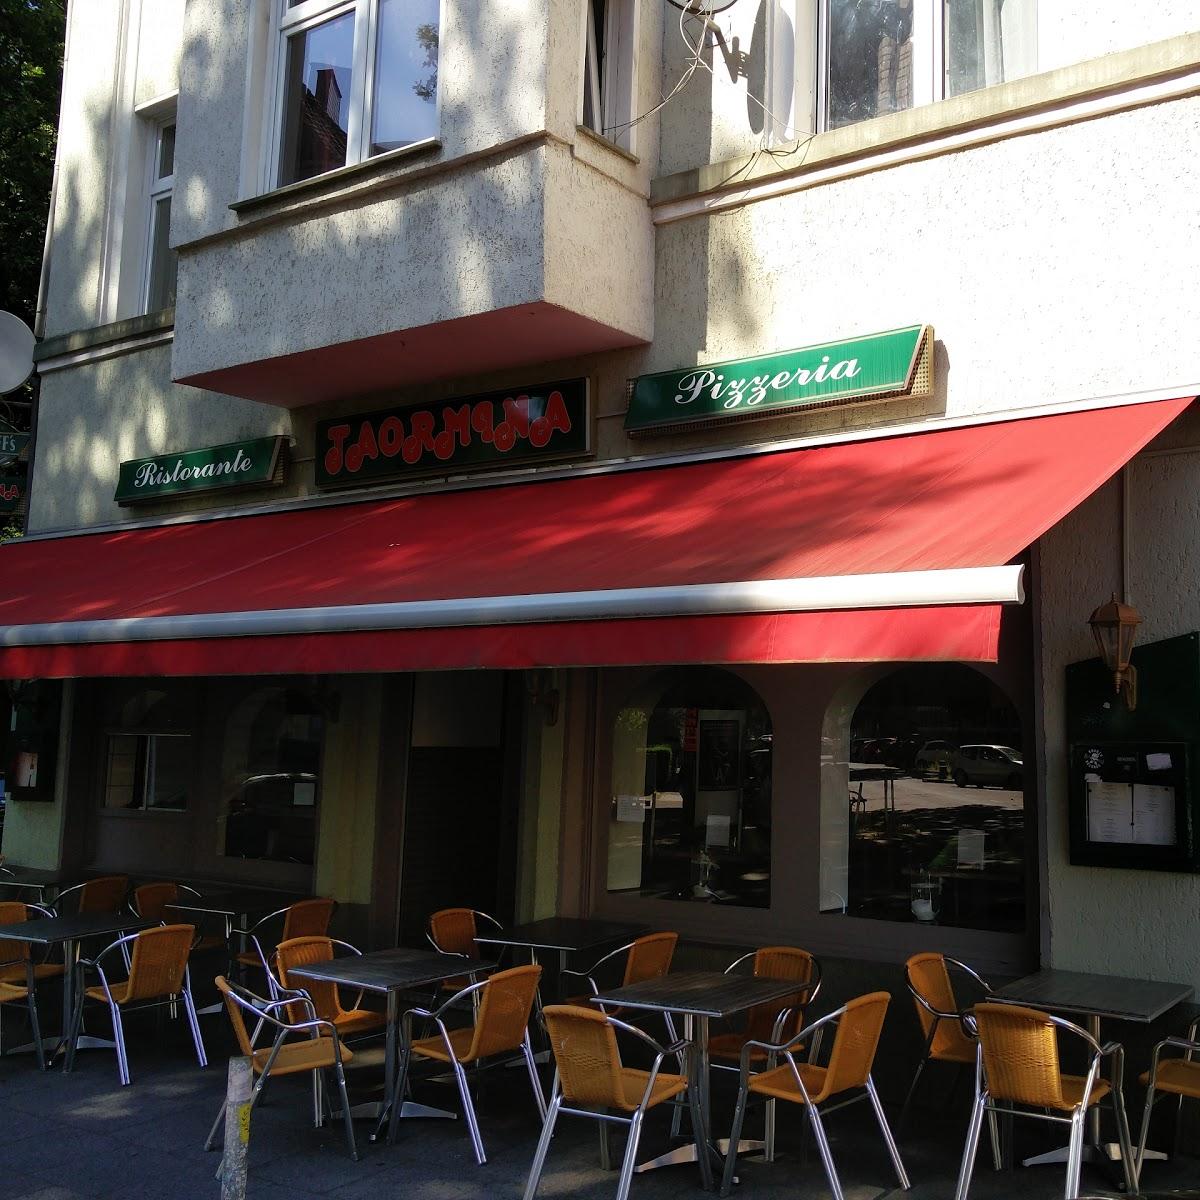 Restaurant "Restaurant Taormina" in Dortmund